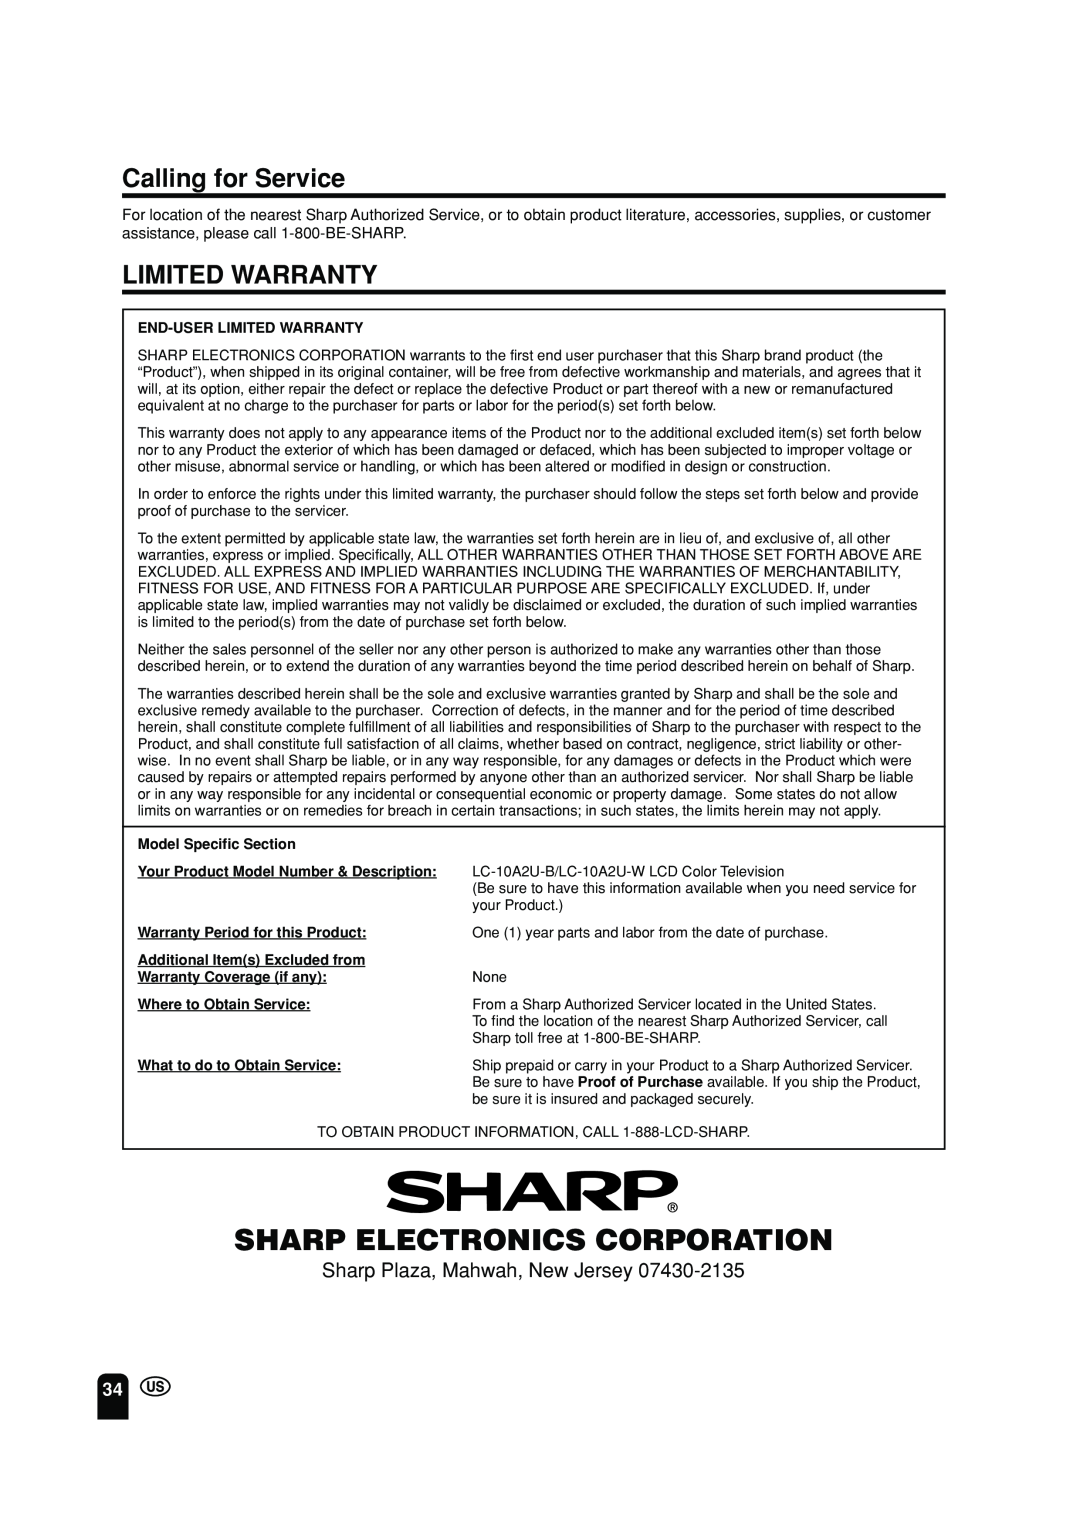 Sharp LC 10A2U Sharp Electronics Corporation, Calling for Service, Limited Warranty, Sharp Plaza, Mahwah, New Jersey 